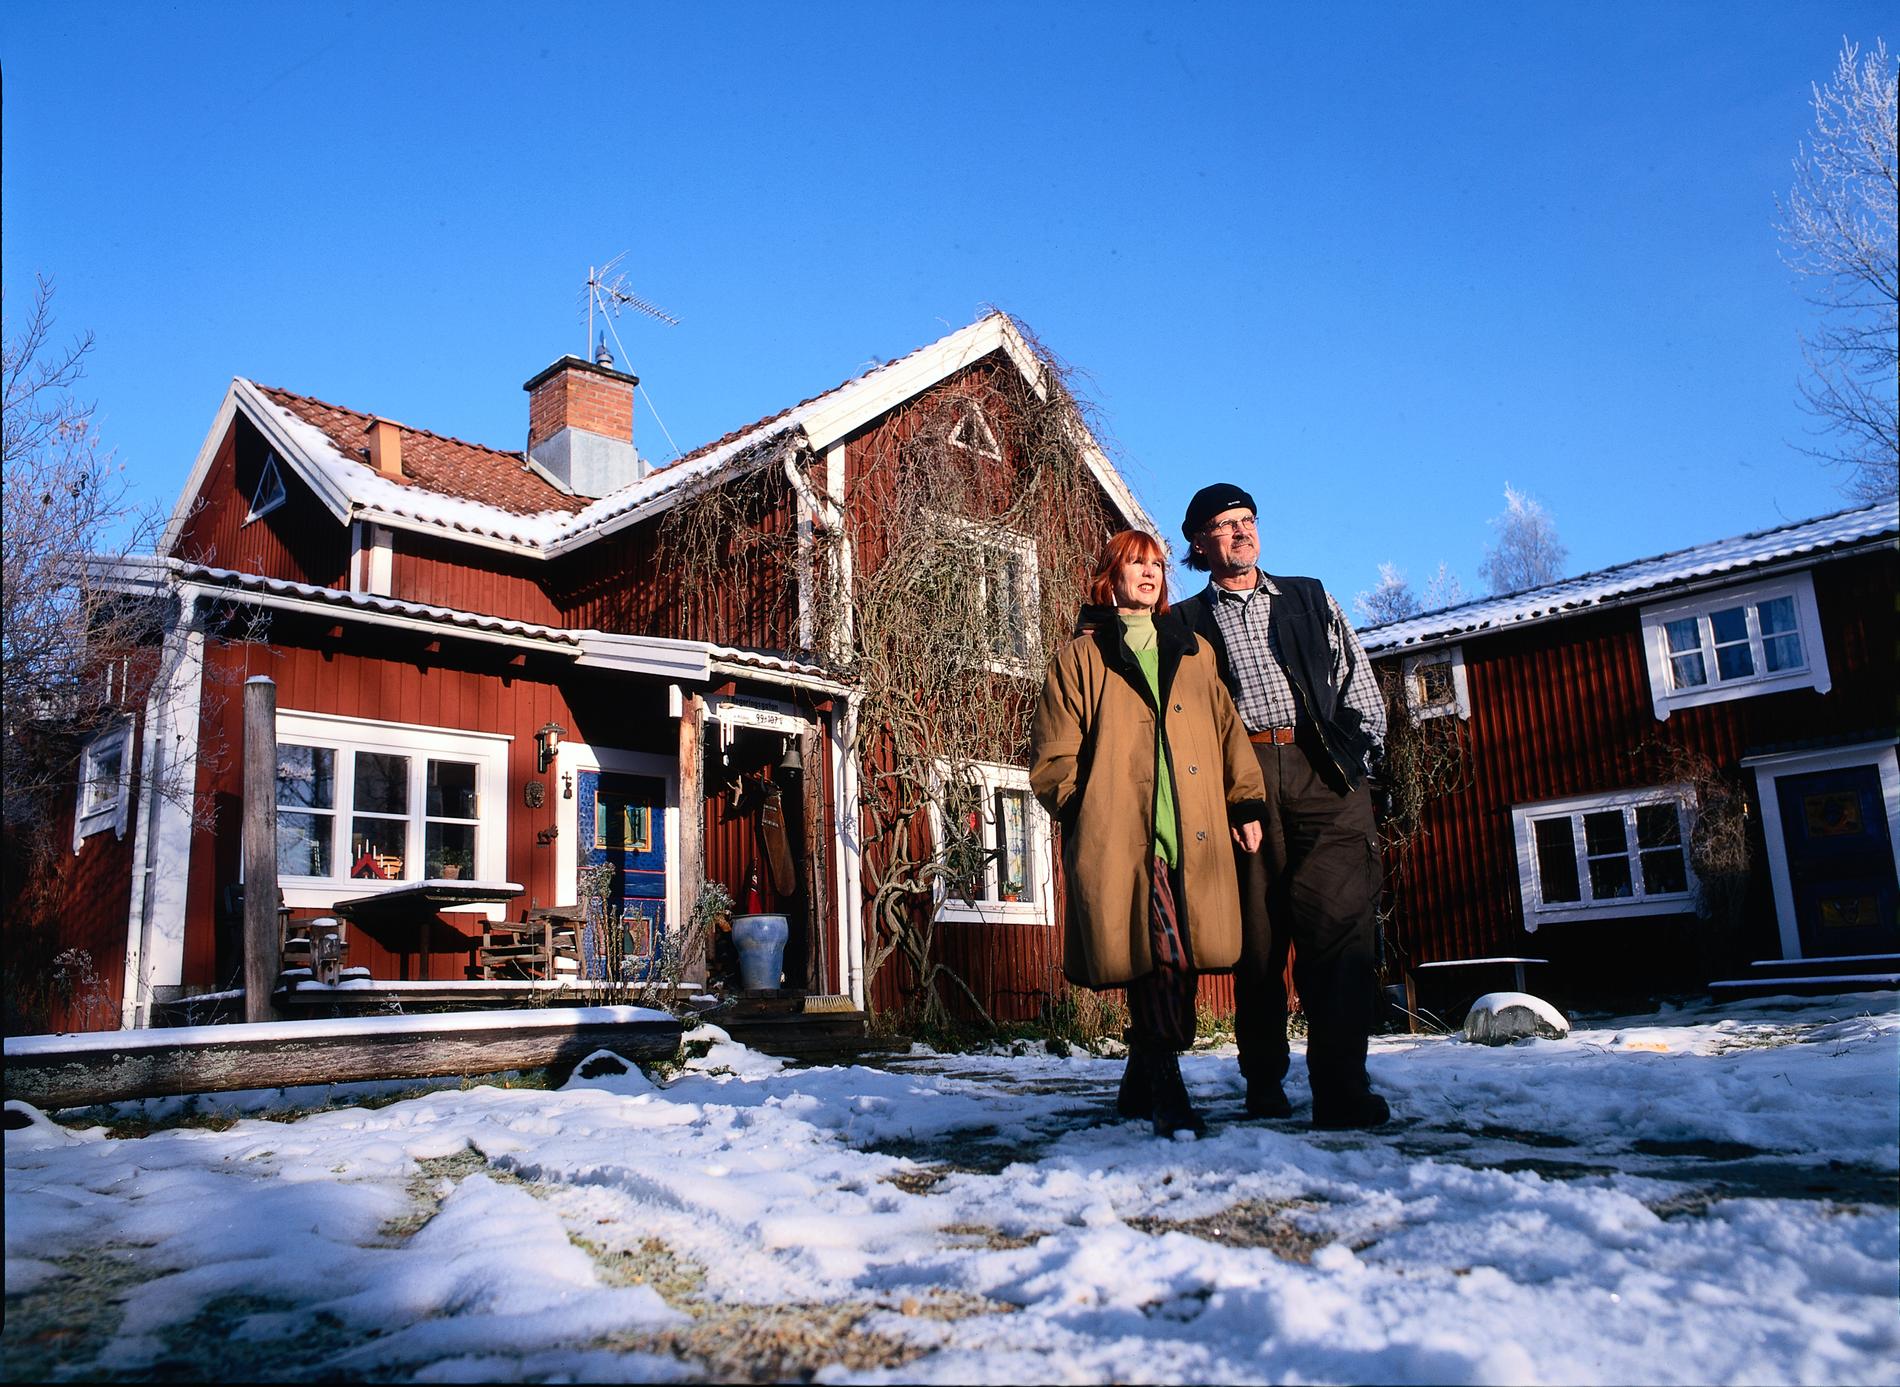 Hemma hos paret Hydman Vallien i Åfors i Småland. 